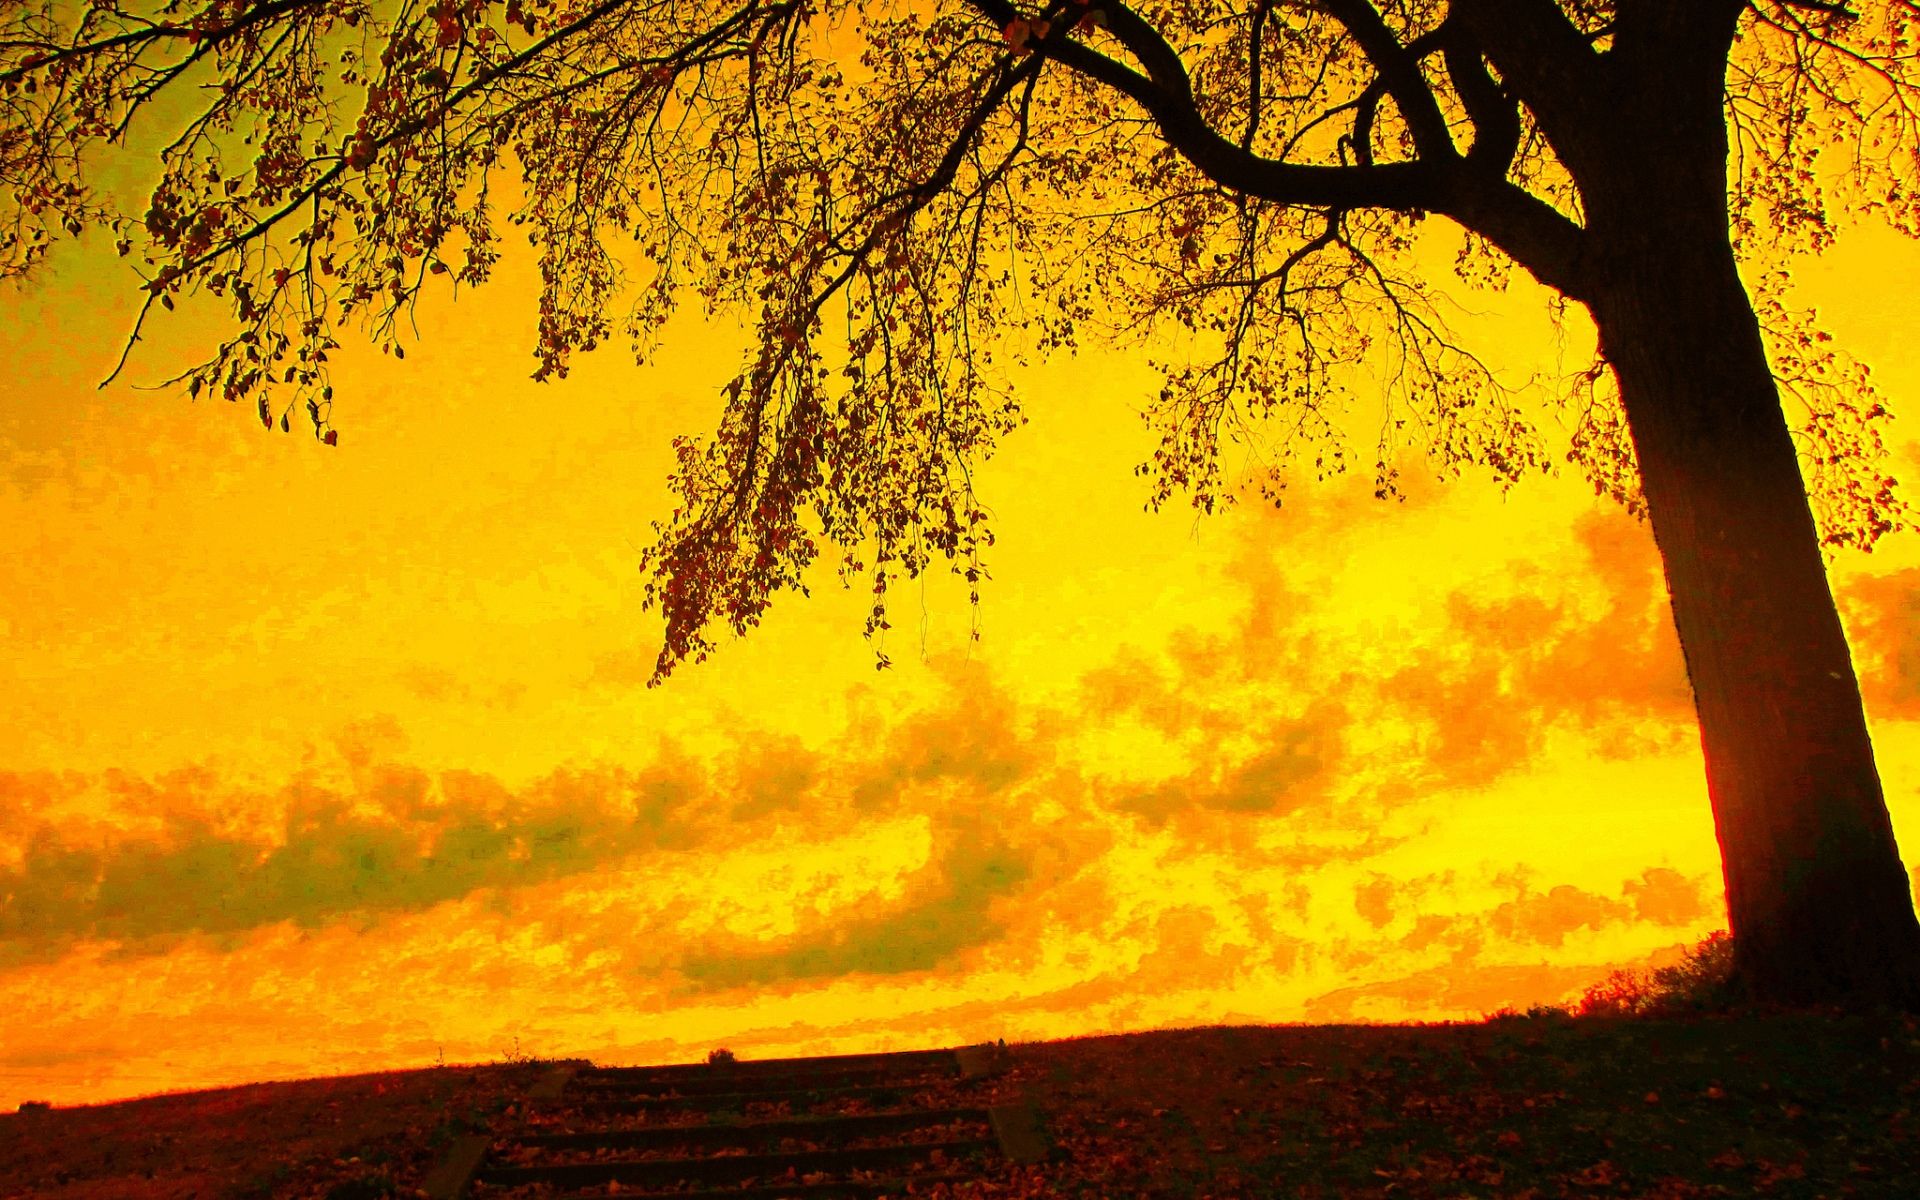 Autumn tree sky yellow background walls | Yellow | Pinterest ...